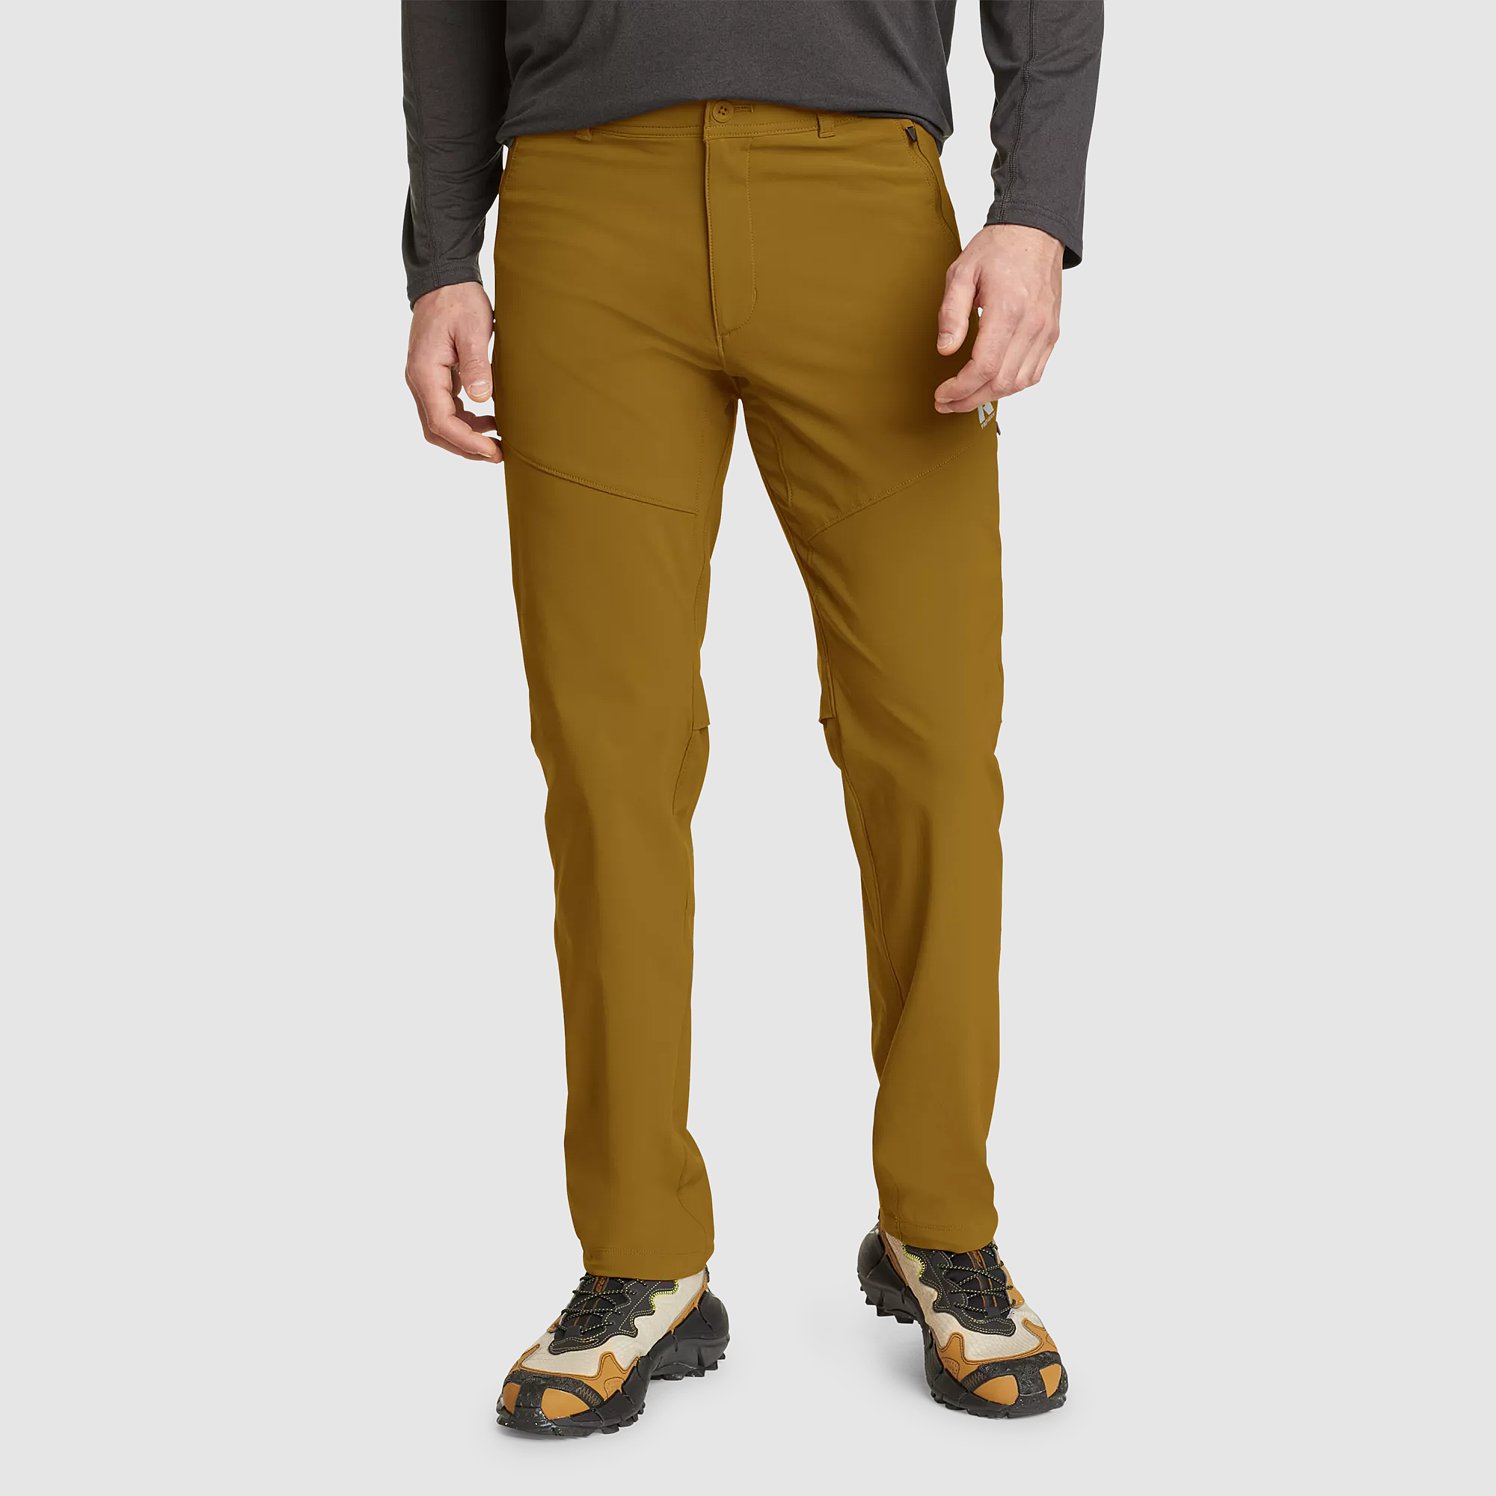 Buy Eddie Bauer Men's Guide Pro Work Pants at Ubuy India